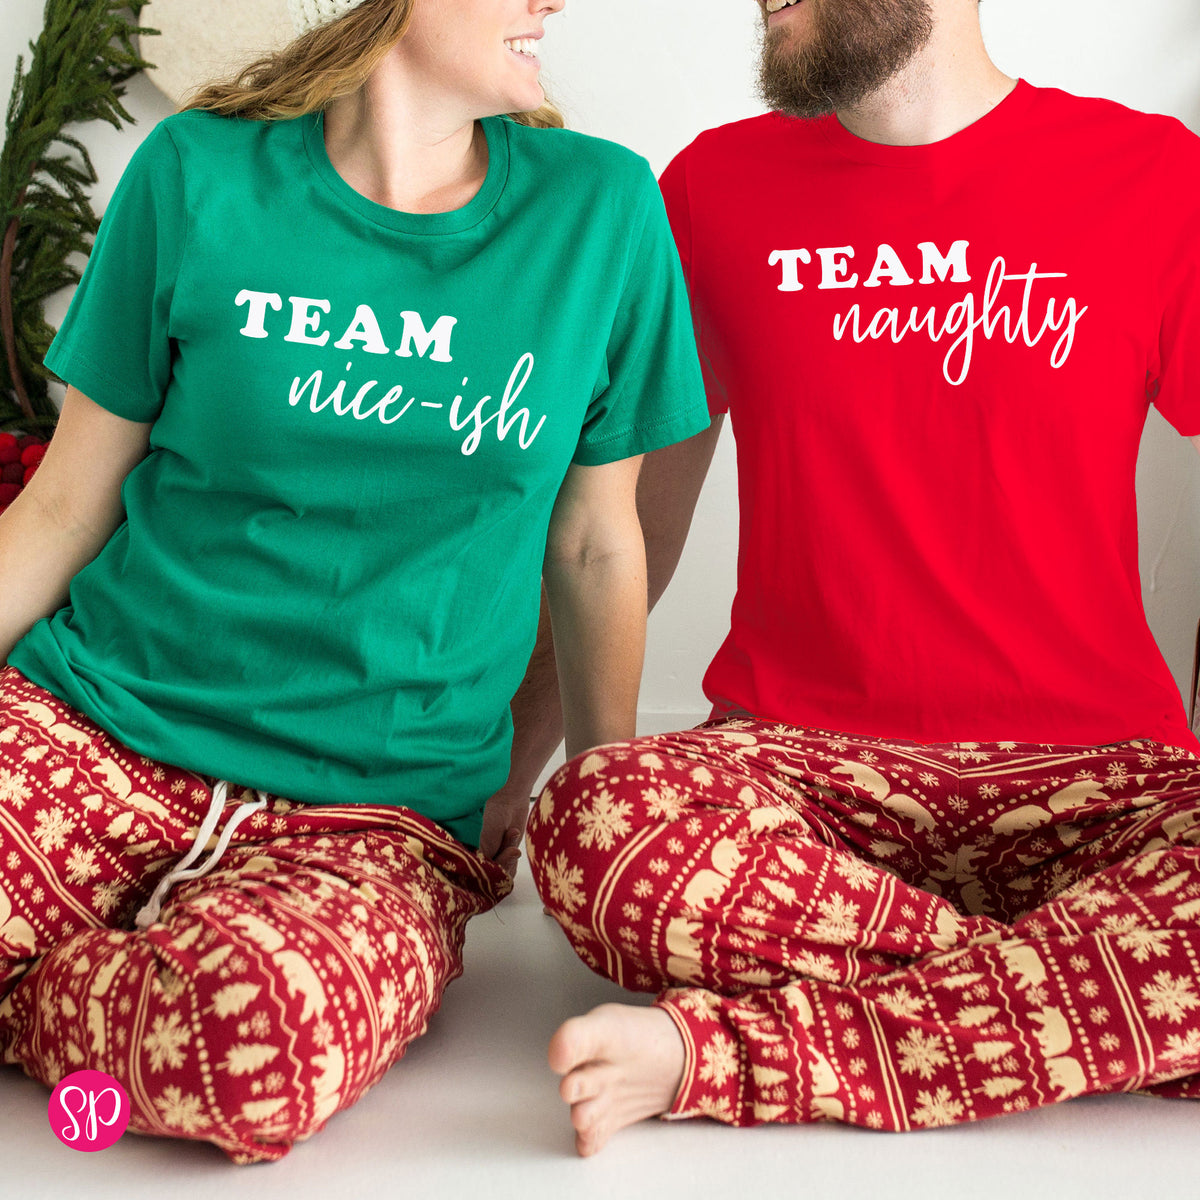 Team Nice-ish Naughty Funny Couples Christmas Holiday Workout Fitness Buddies Competition Group Shirt Tee Shirts